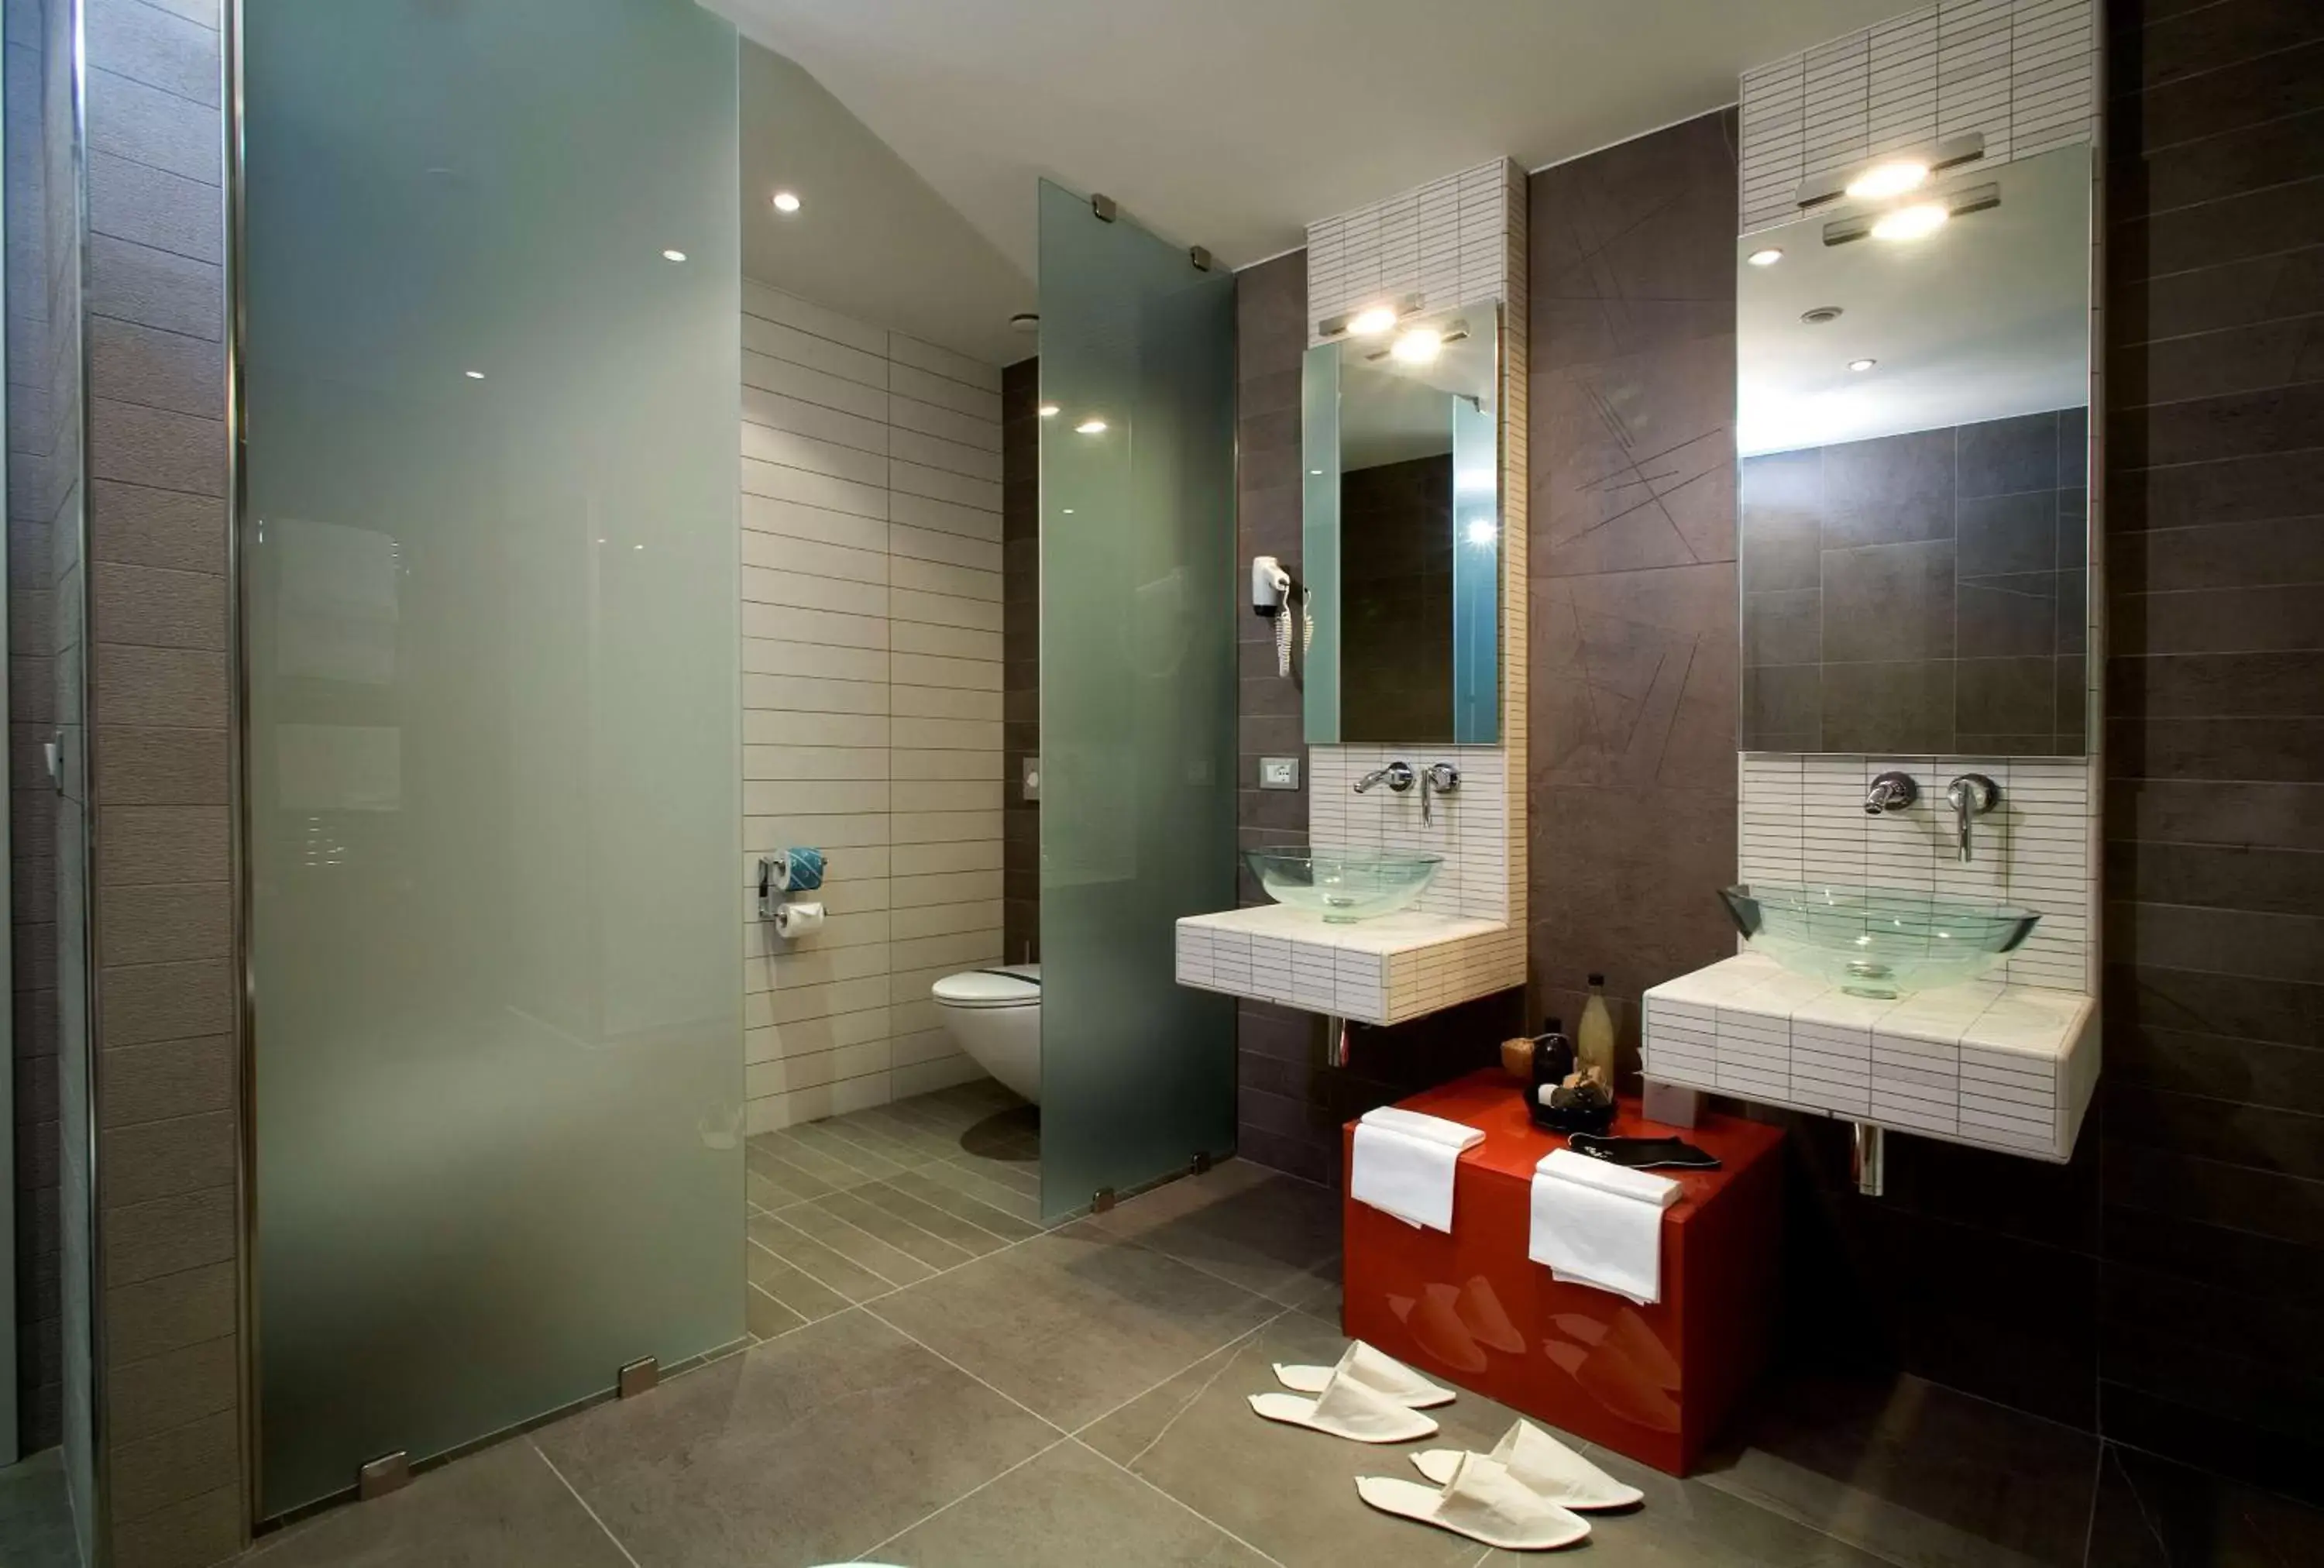 Photo of the whole room, Bathroom in Best Western Plus Hotel Galileo Padova